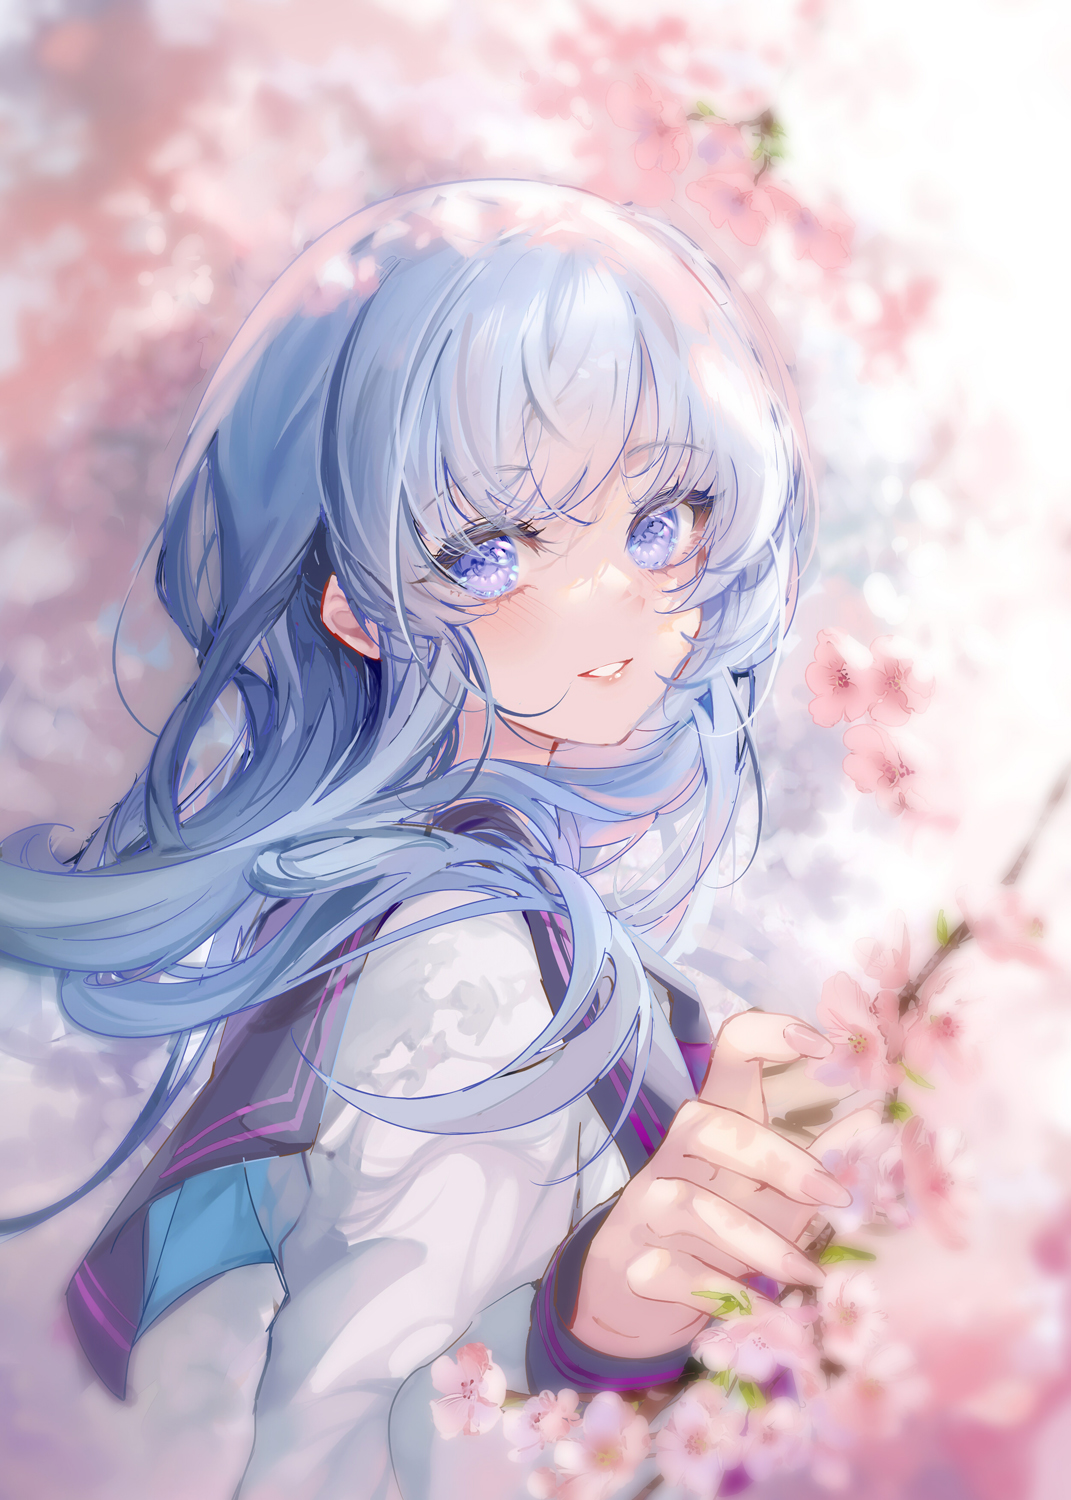 blue hair, smiling, blue eyes, anime, anime girls, cherry blossom |  1071x1500 Wallpaper - wallhaven.cc